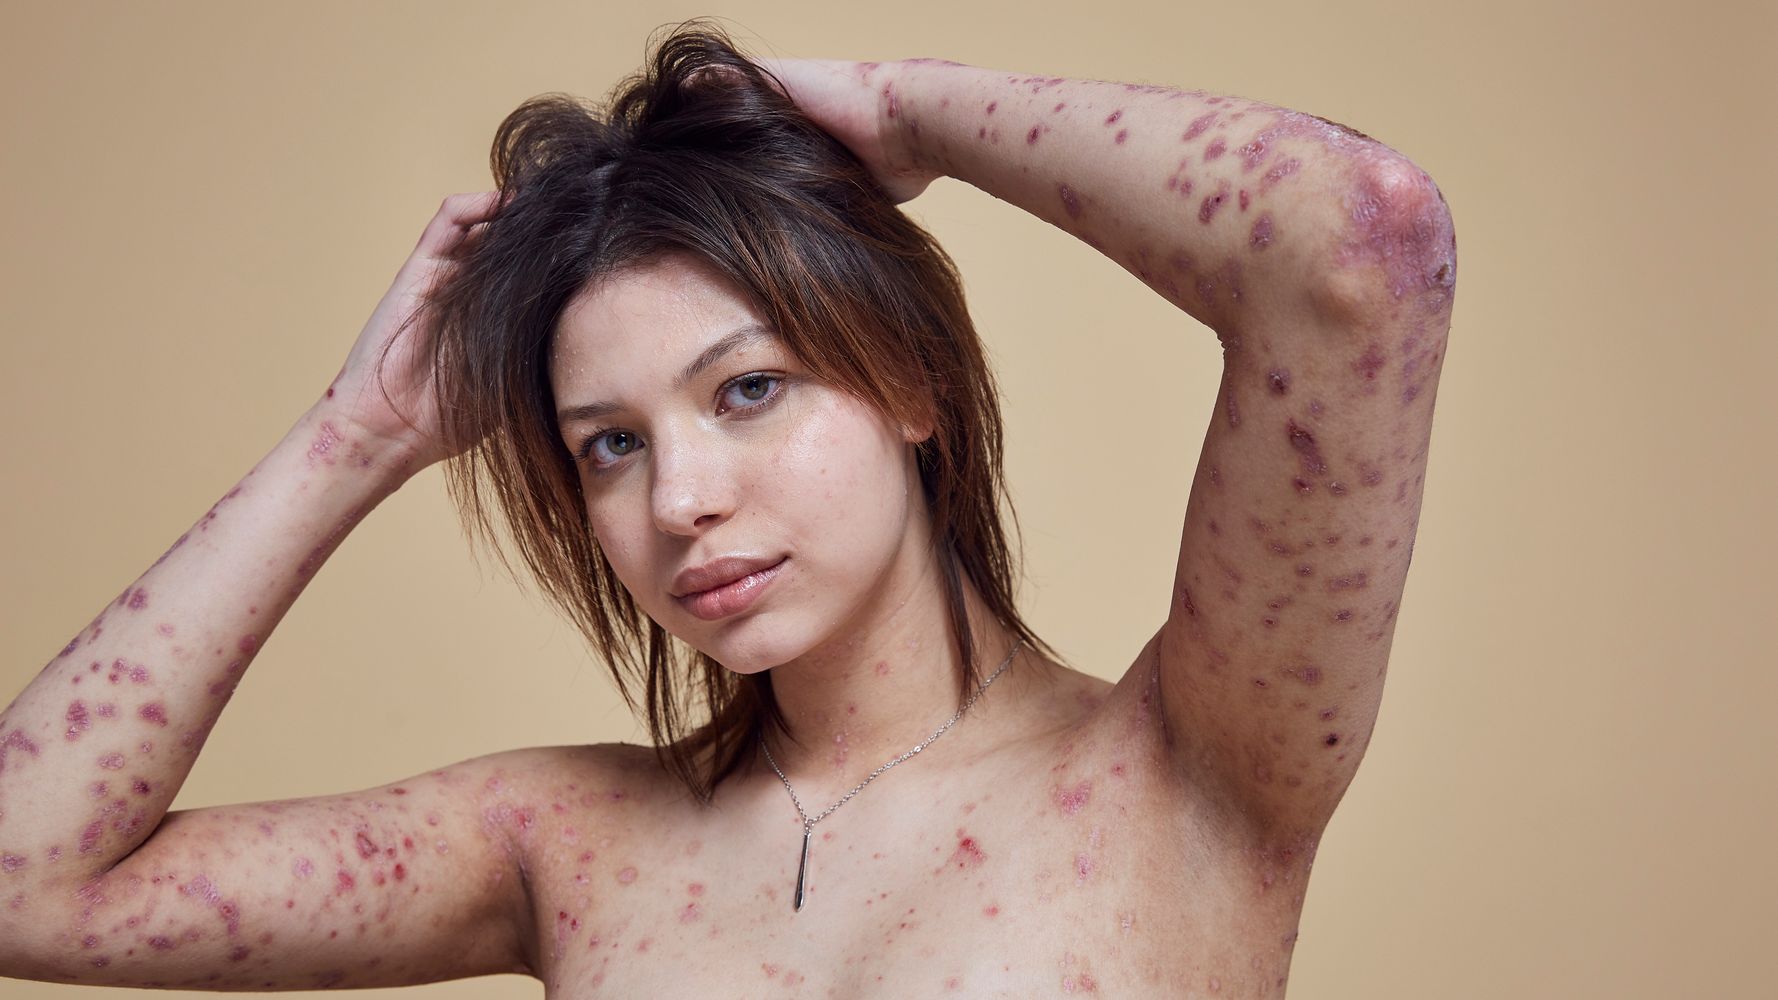 Missguided blames coronavirus for using size 8 women to model plus